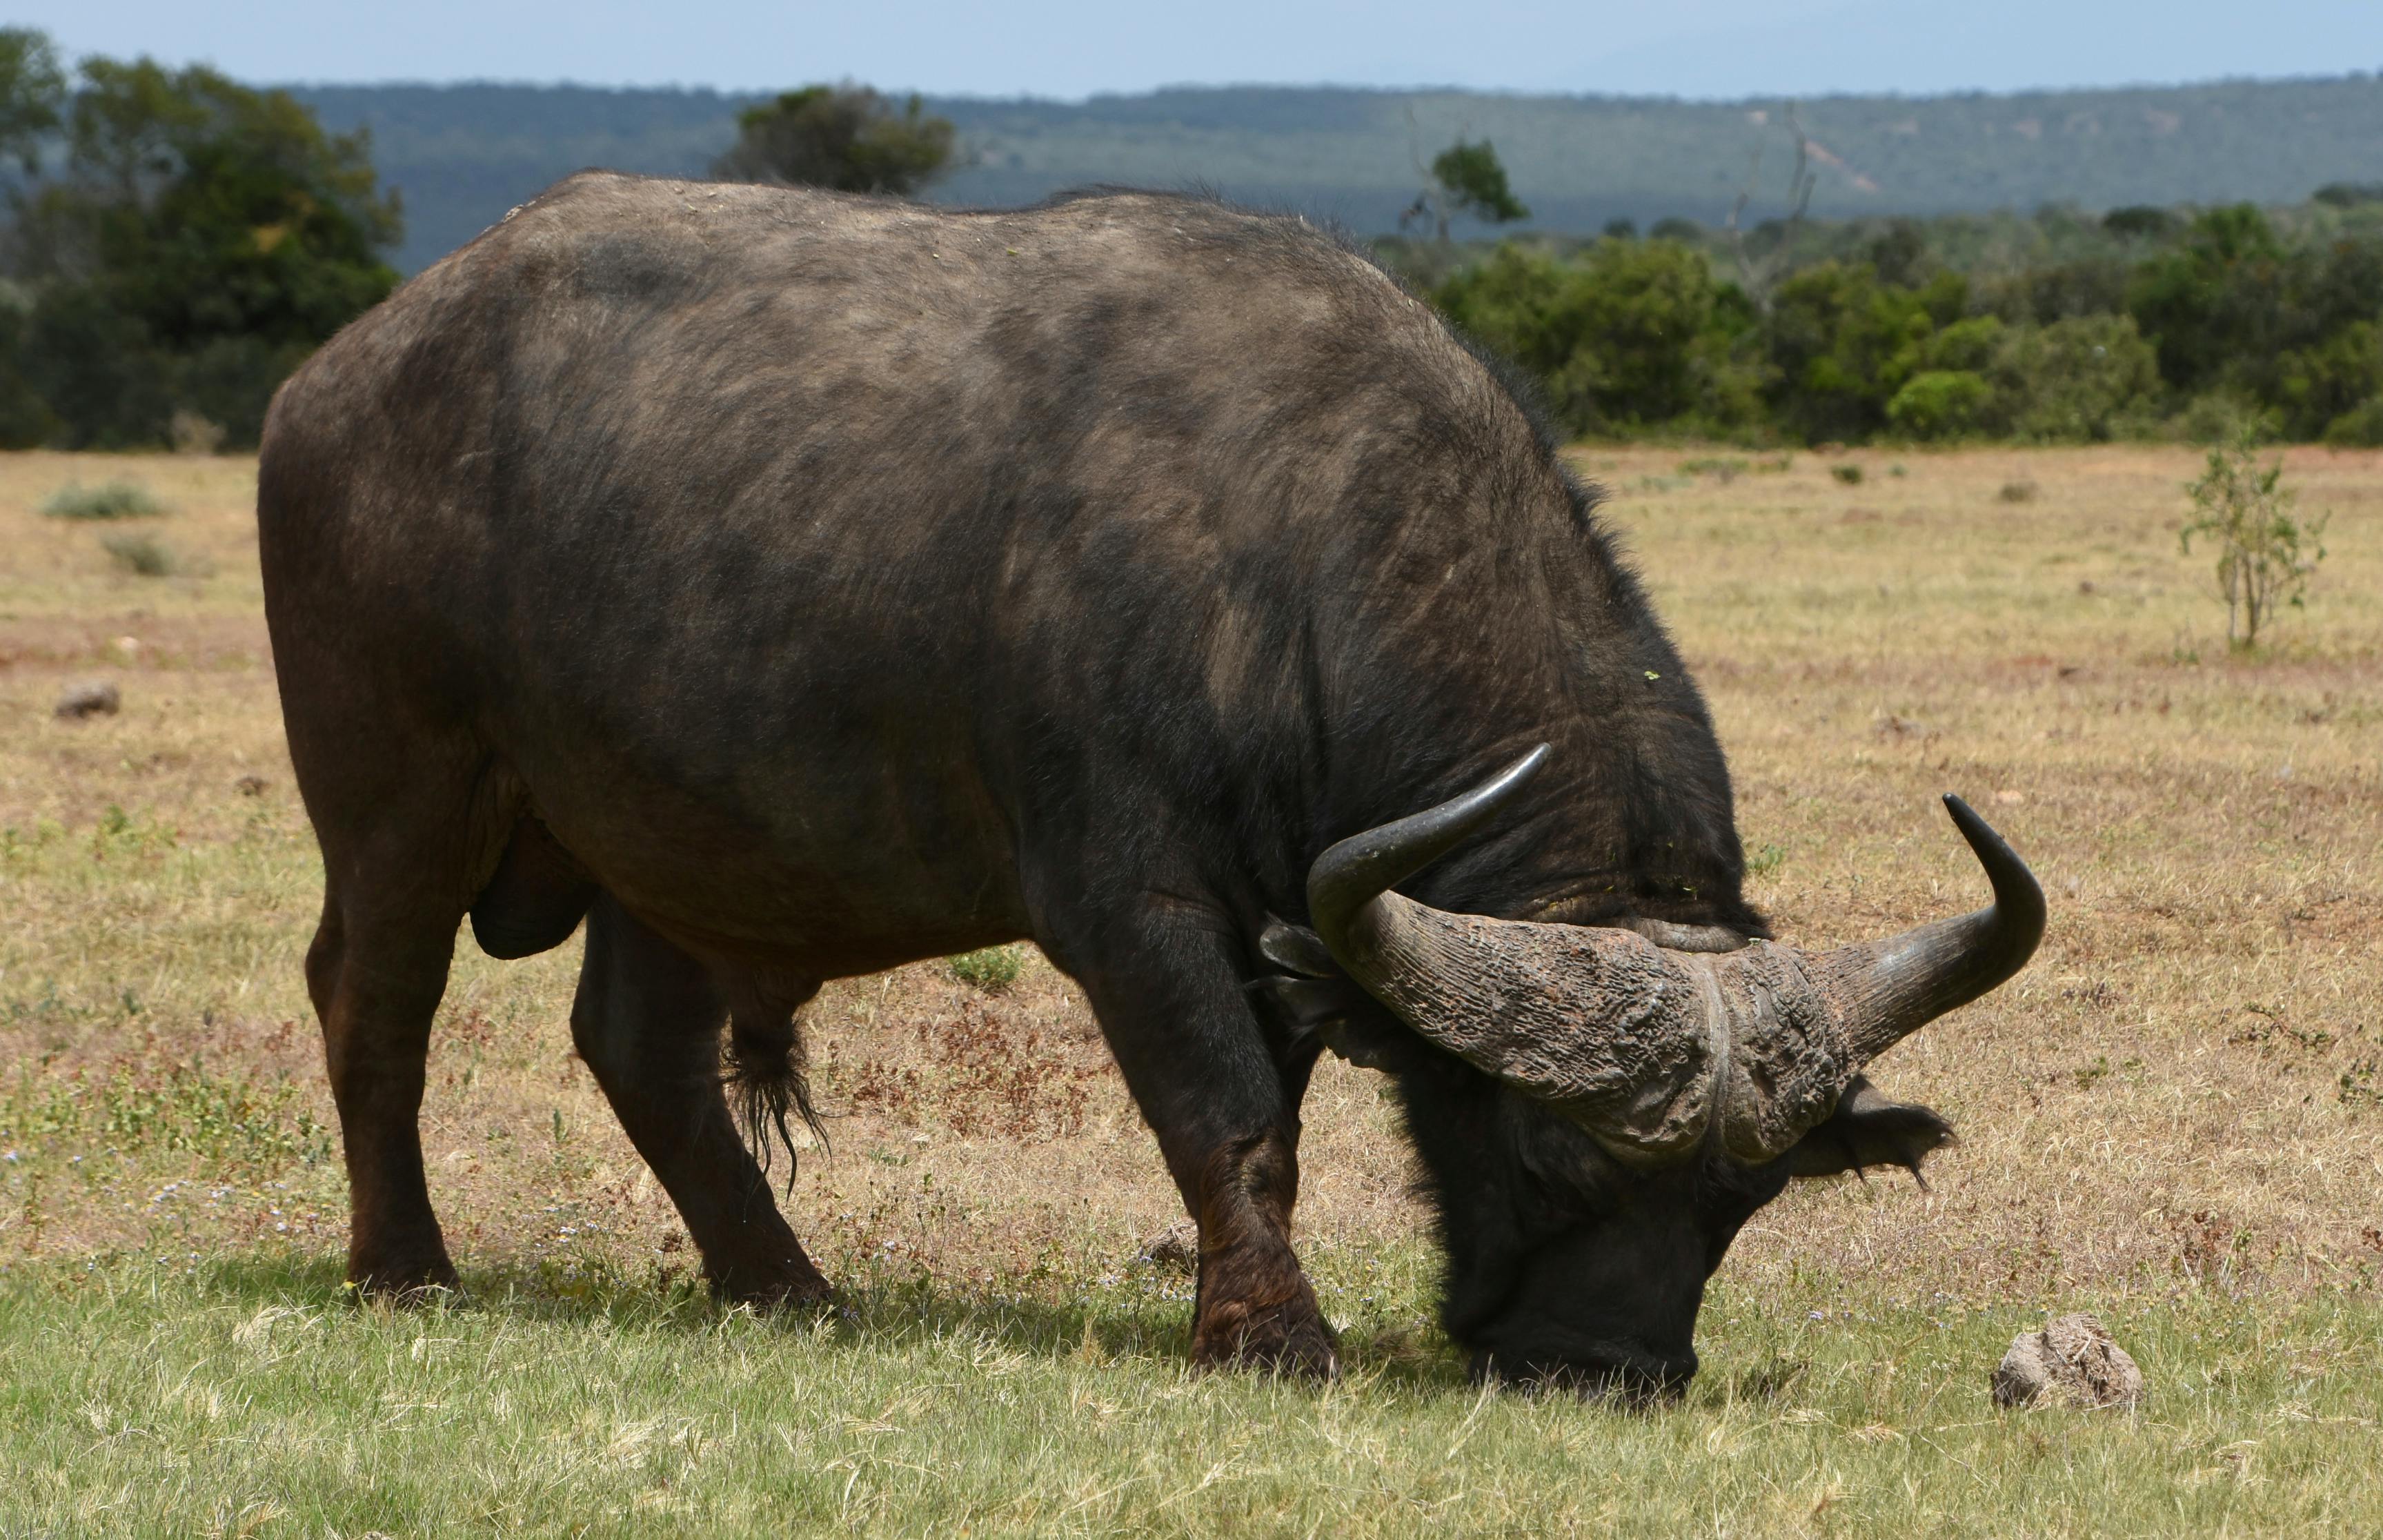 Water Buffalo on Green Grass Field · Free Stock Photo